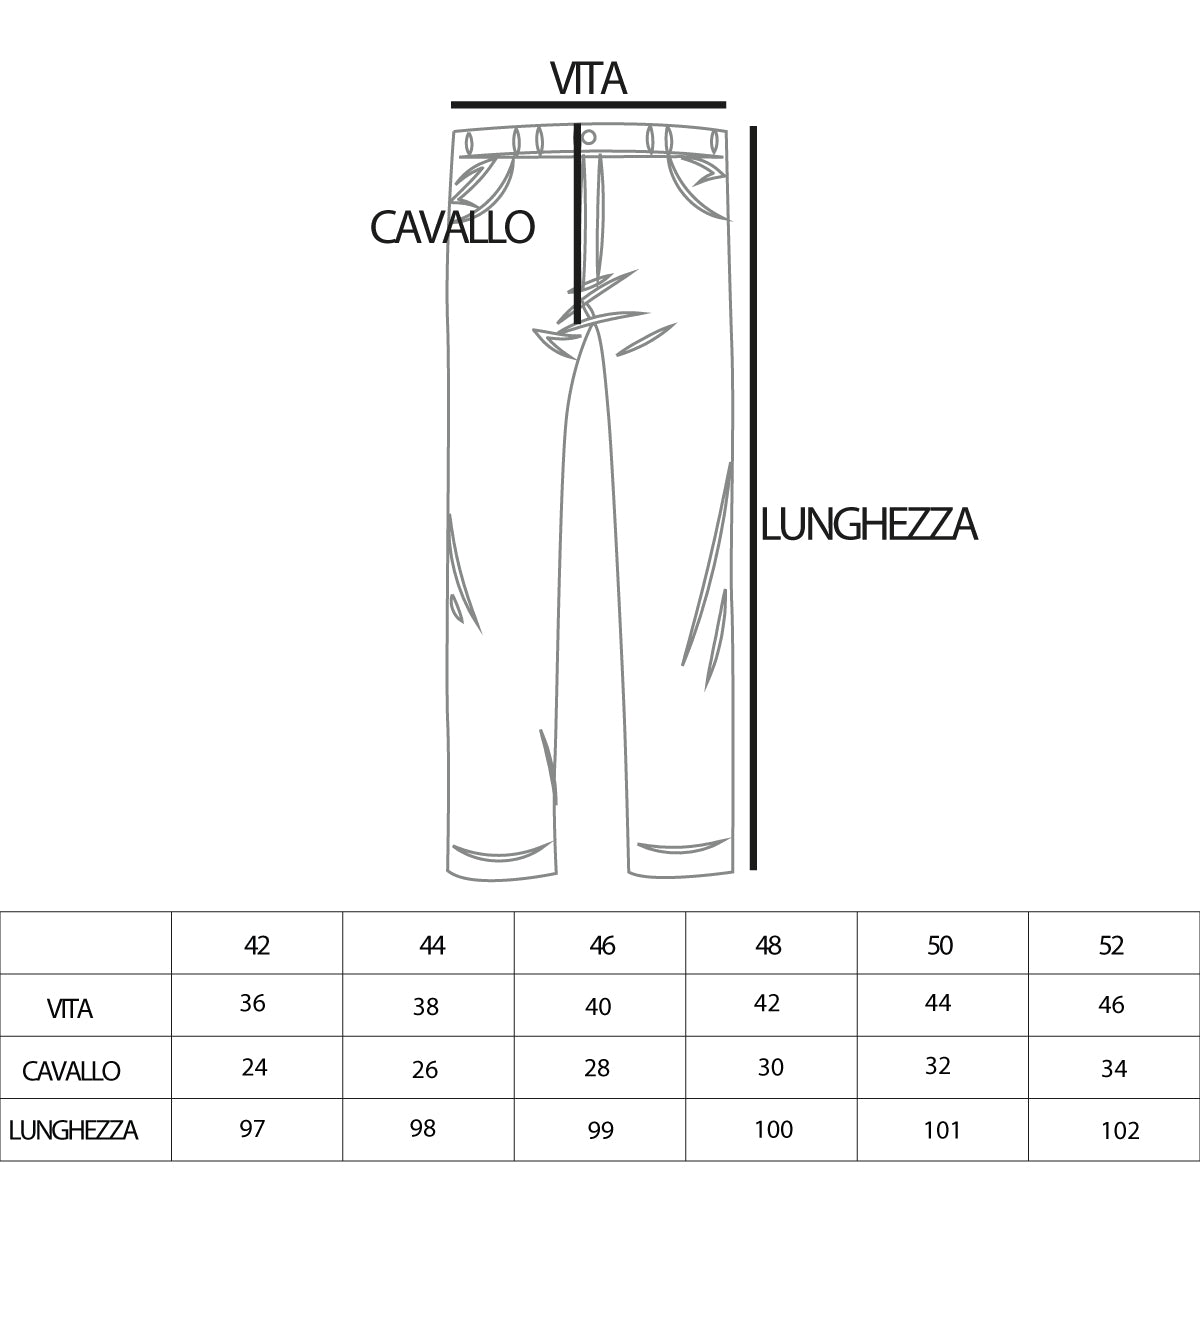 Pantaloni Uomo Tasca America Con Pinces Classico Tinta Unita Verde GIOSAL-P2962A